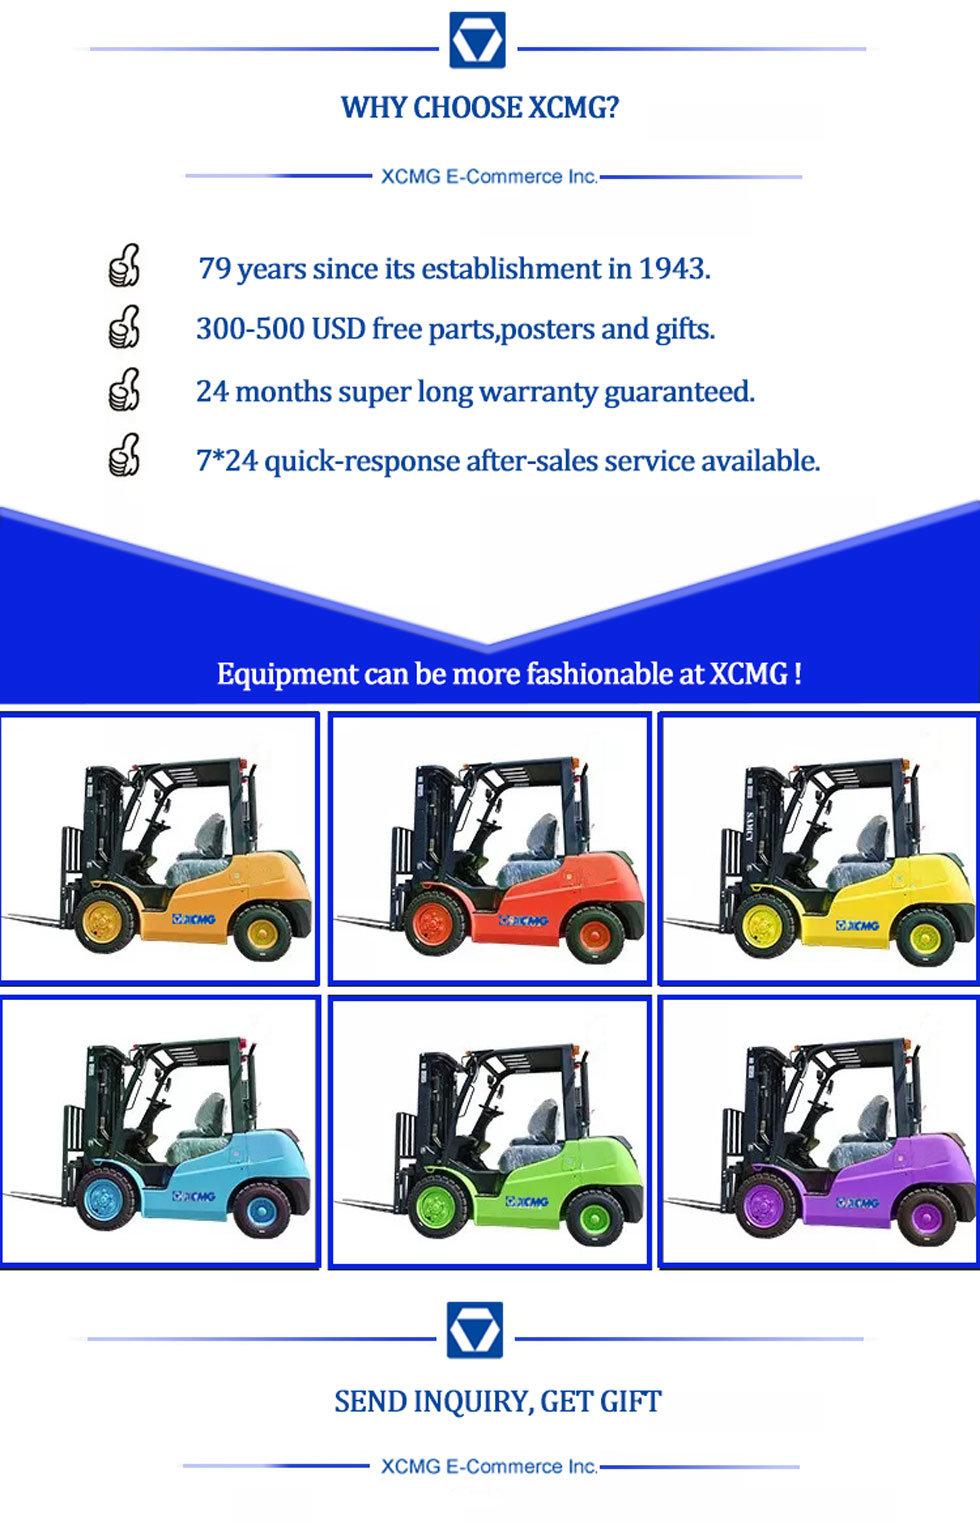 XCMG Intelligent 2ton 2.5ton 3ton Empilhadeira Eletrica Battery Pack Self Loading 1000 Kg Forklift Price in Dubai